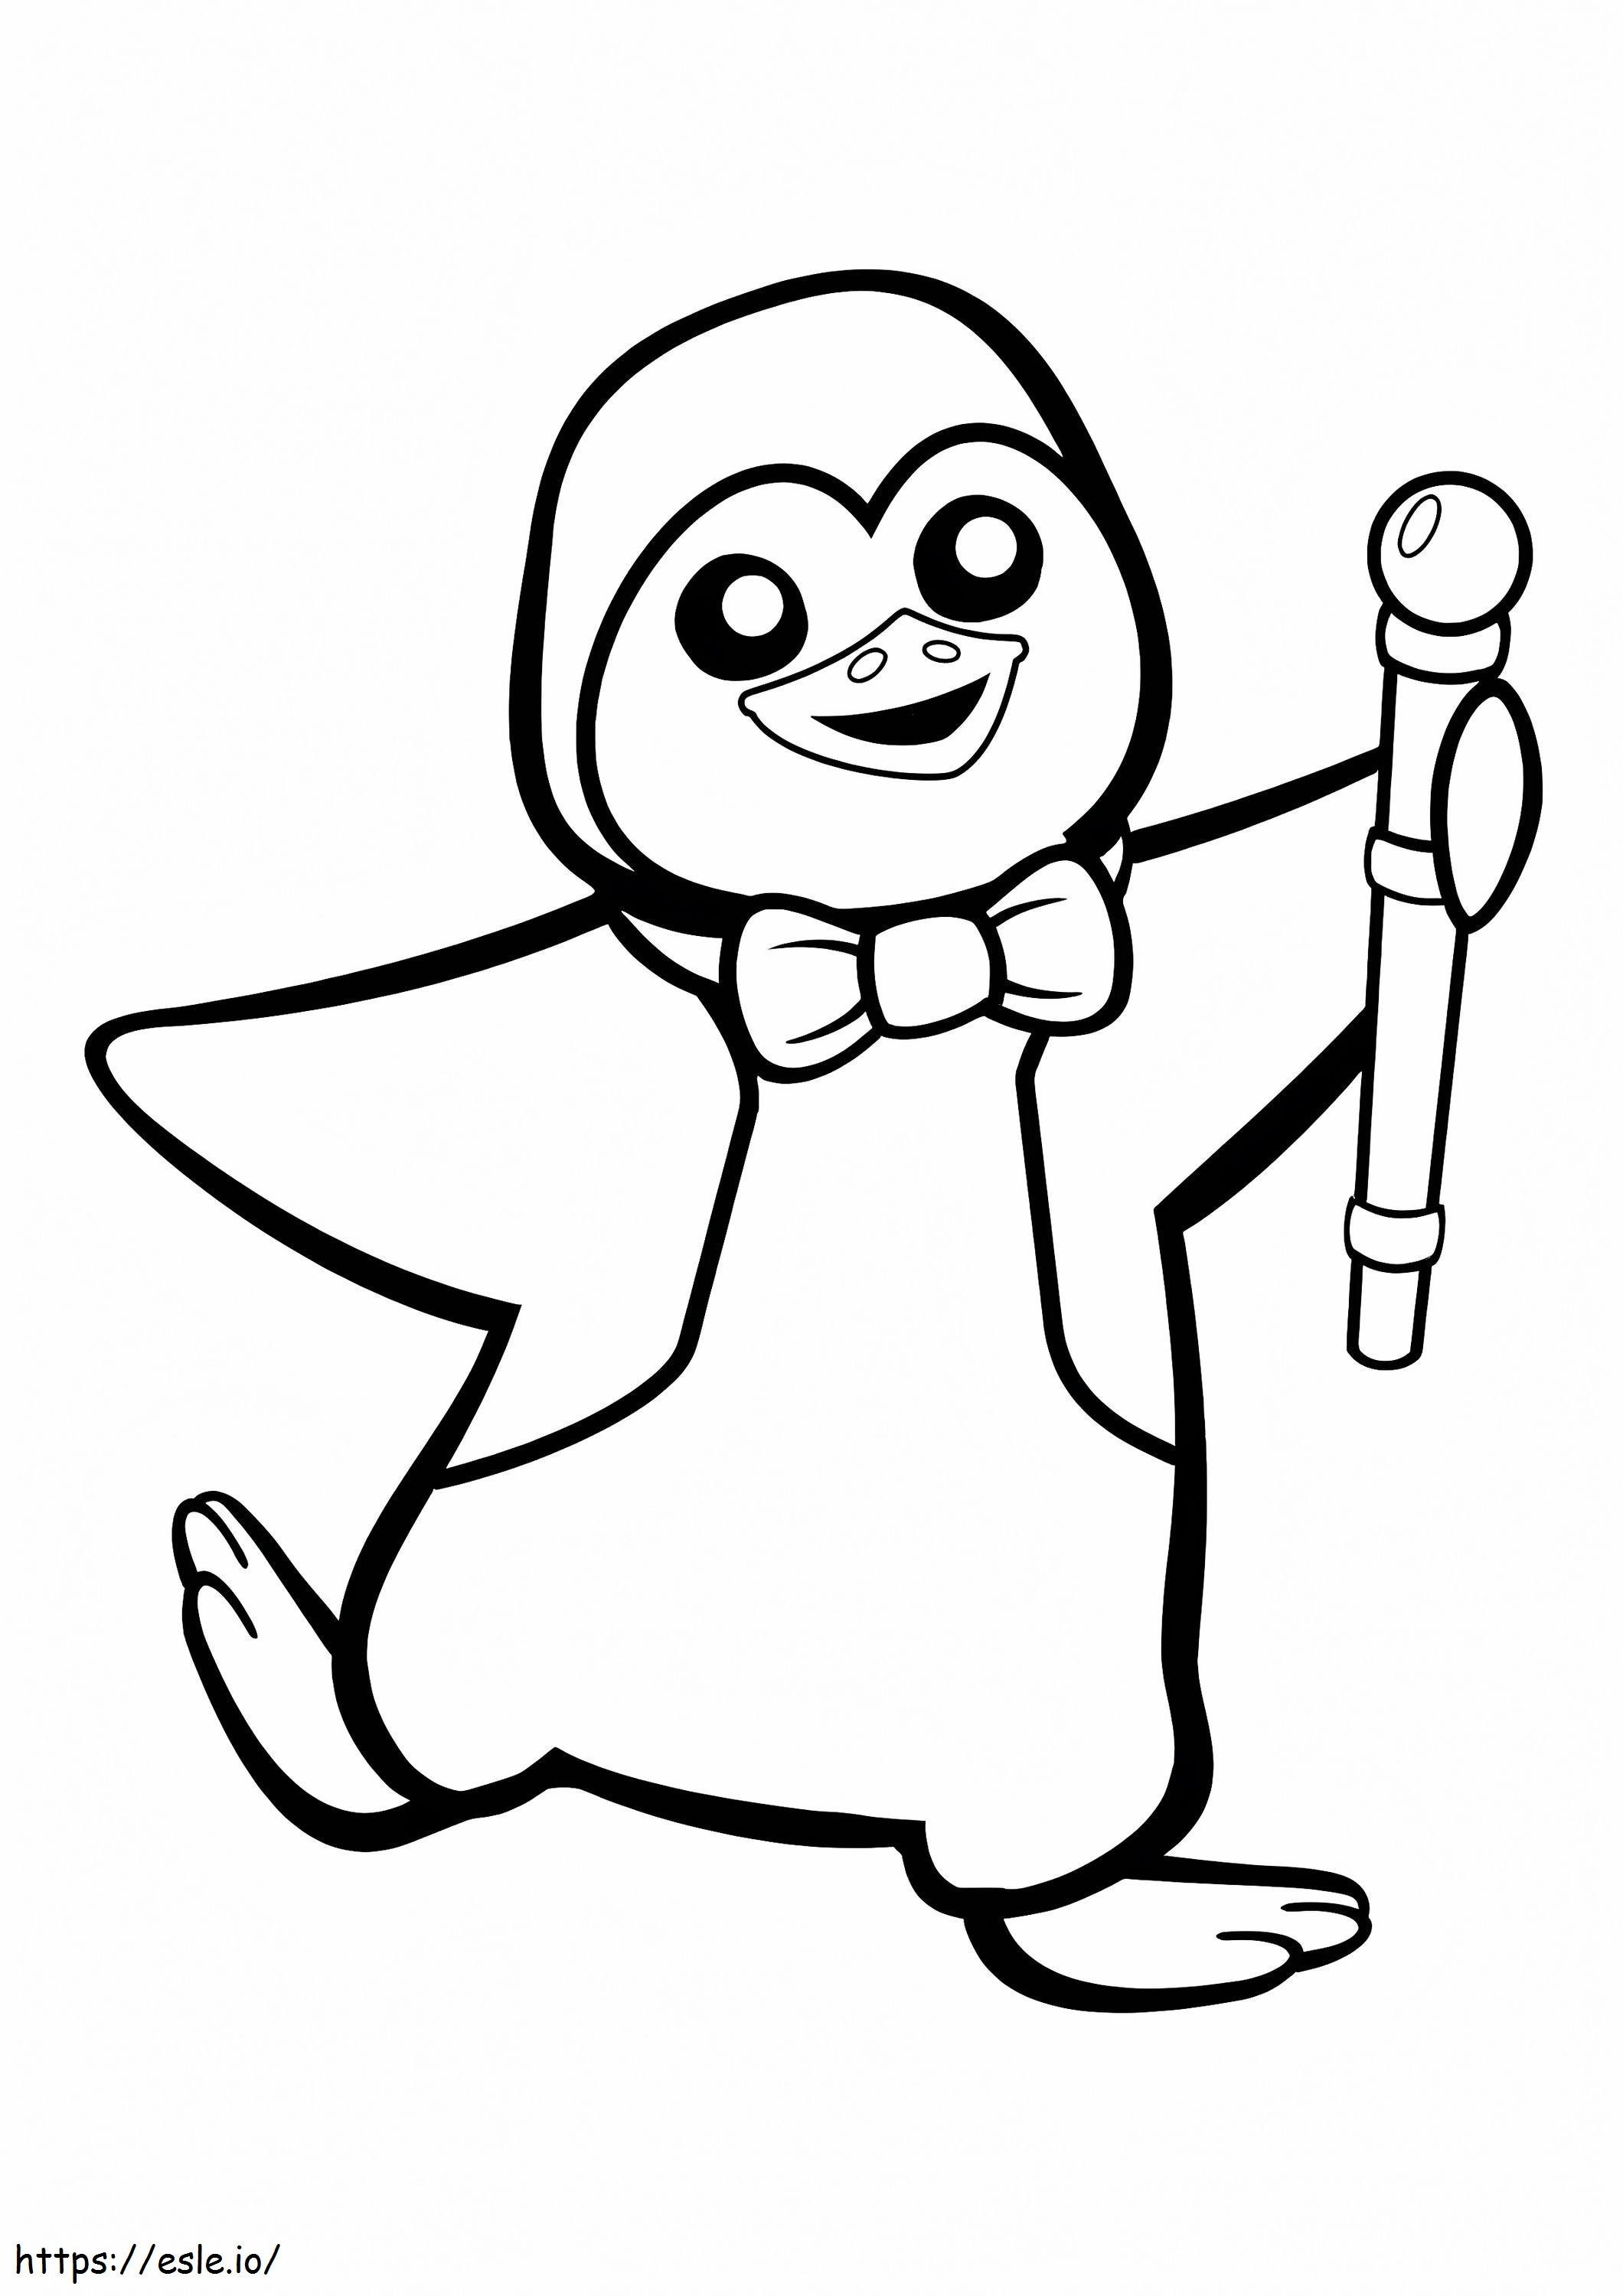 Pinguim Mágico para colorir